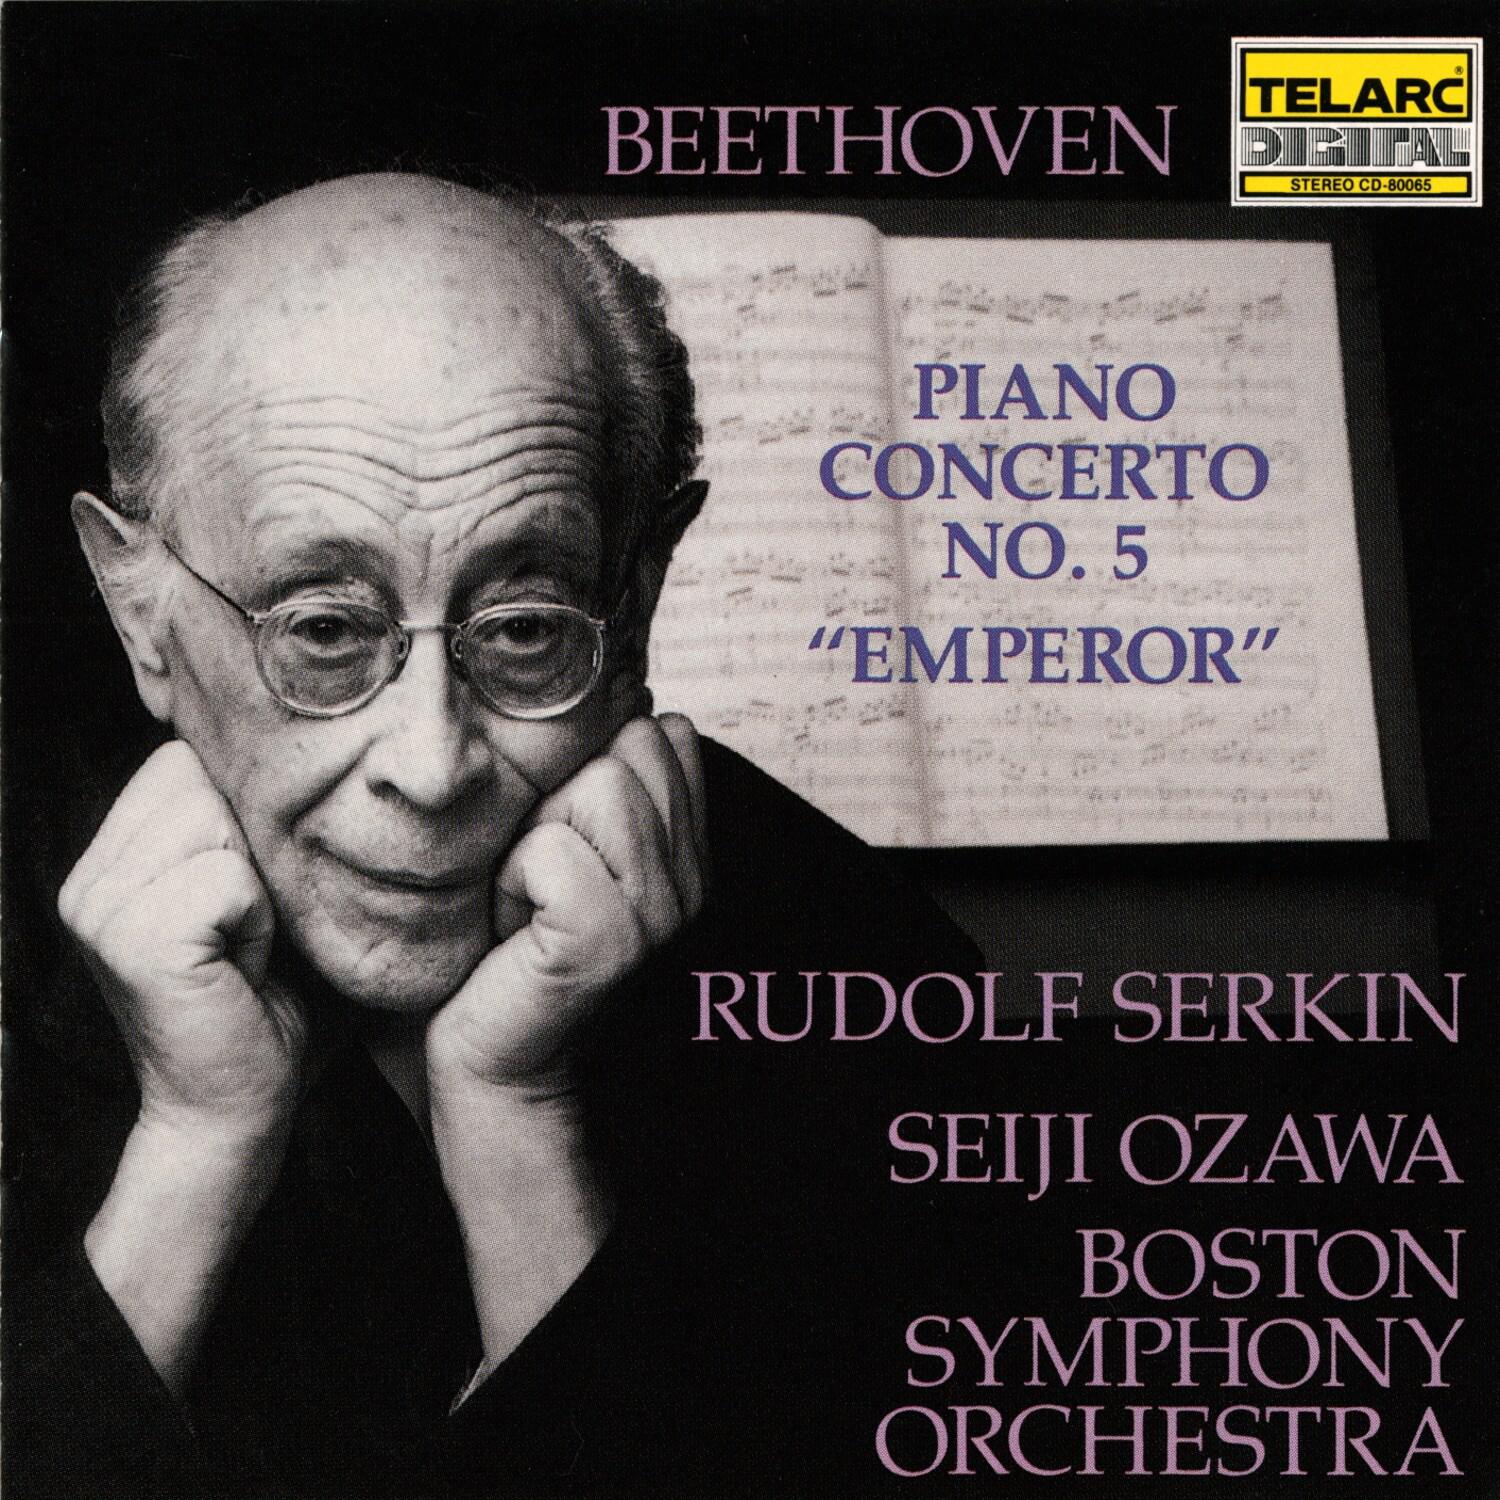 Concerto No. 5 in E-flat, Op. 73 "Emperor": I. Allegro